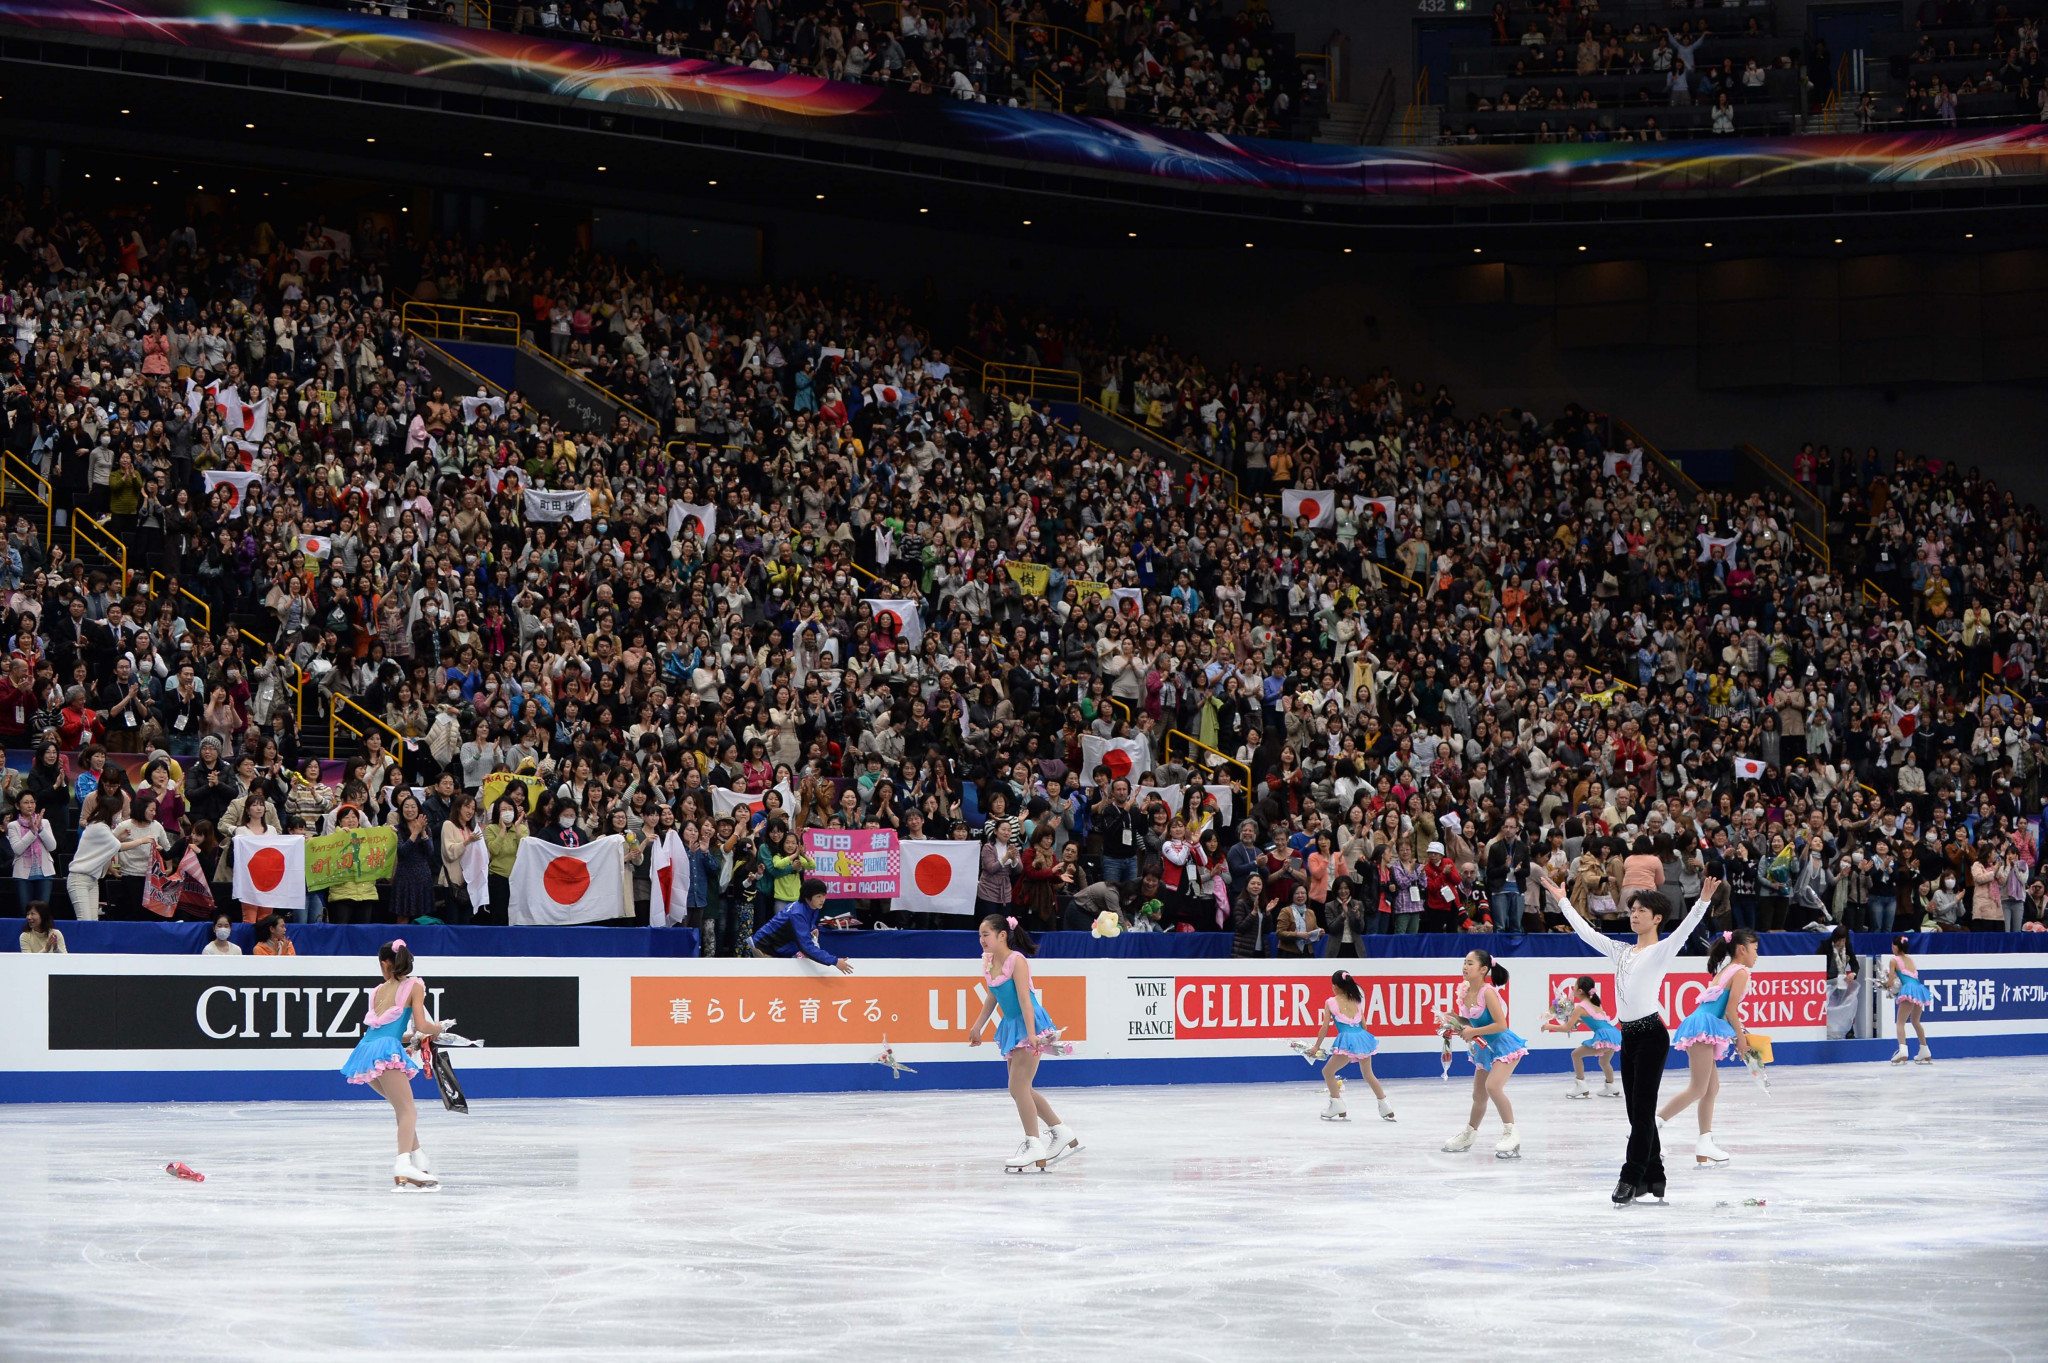 Saitama to stage World Figure Skating Championships in 2023